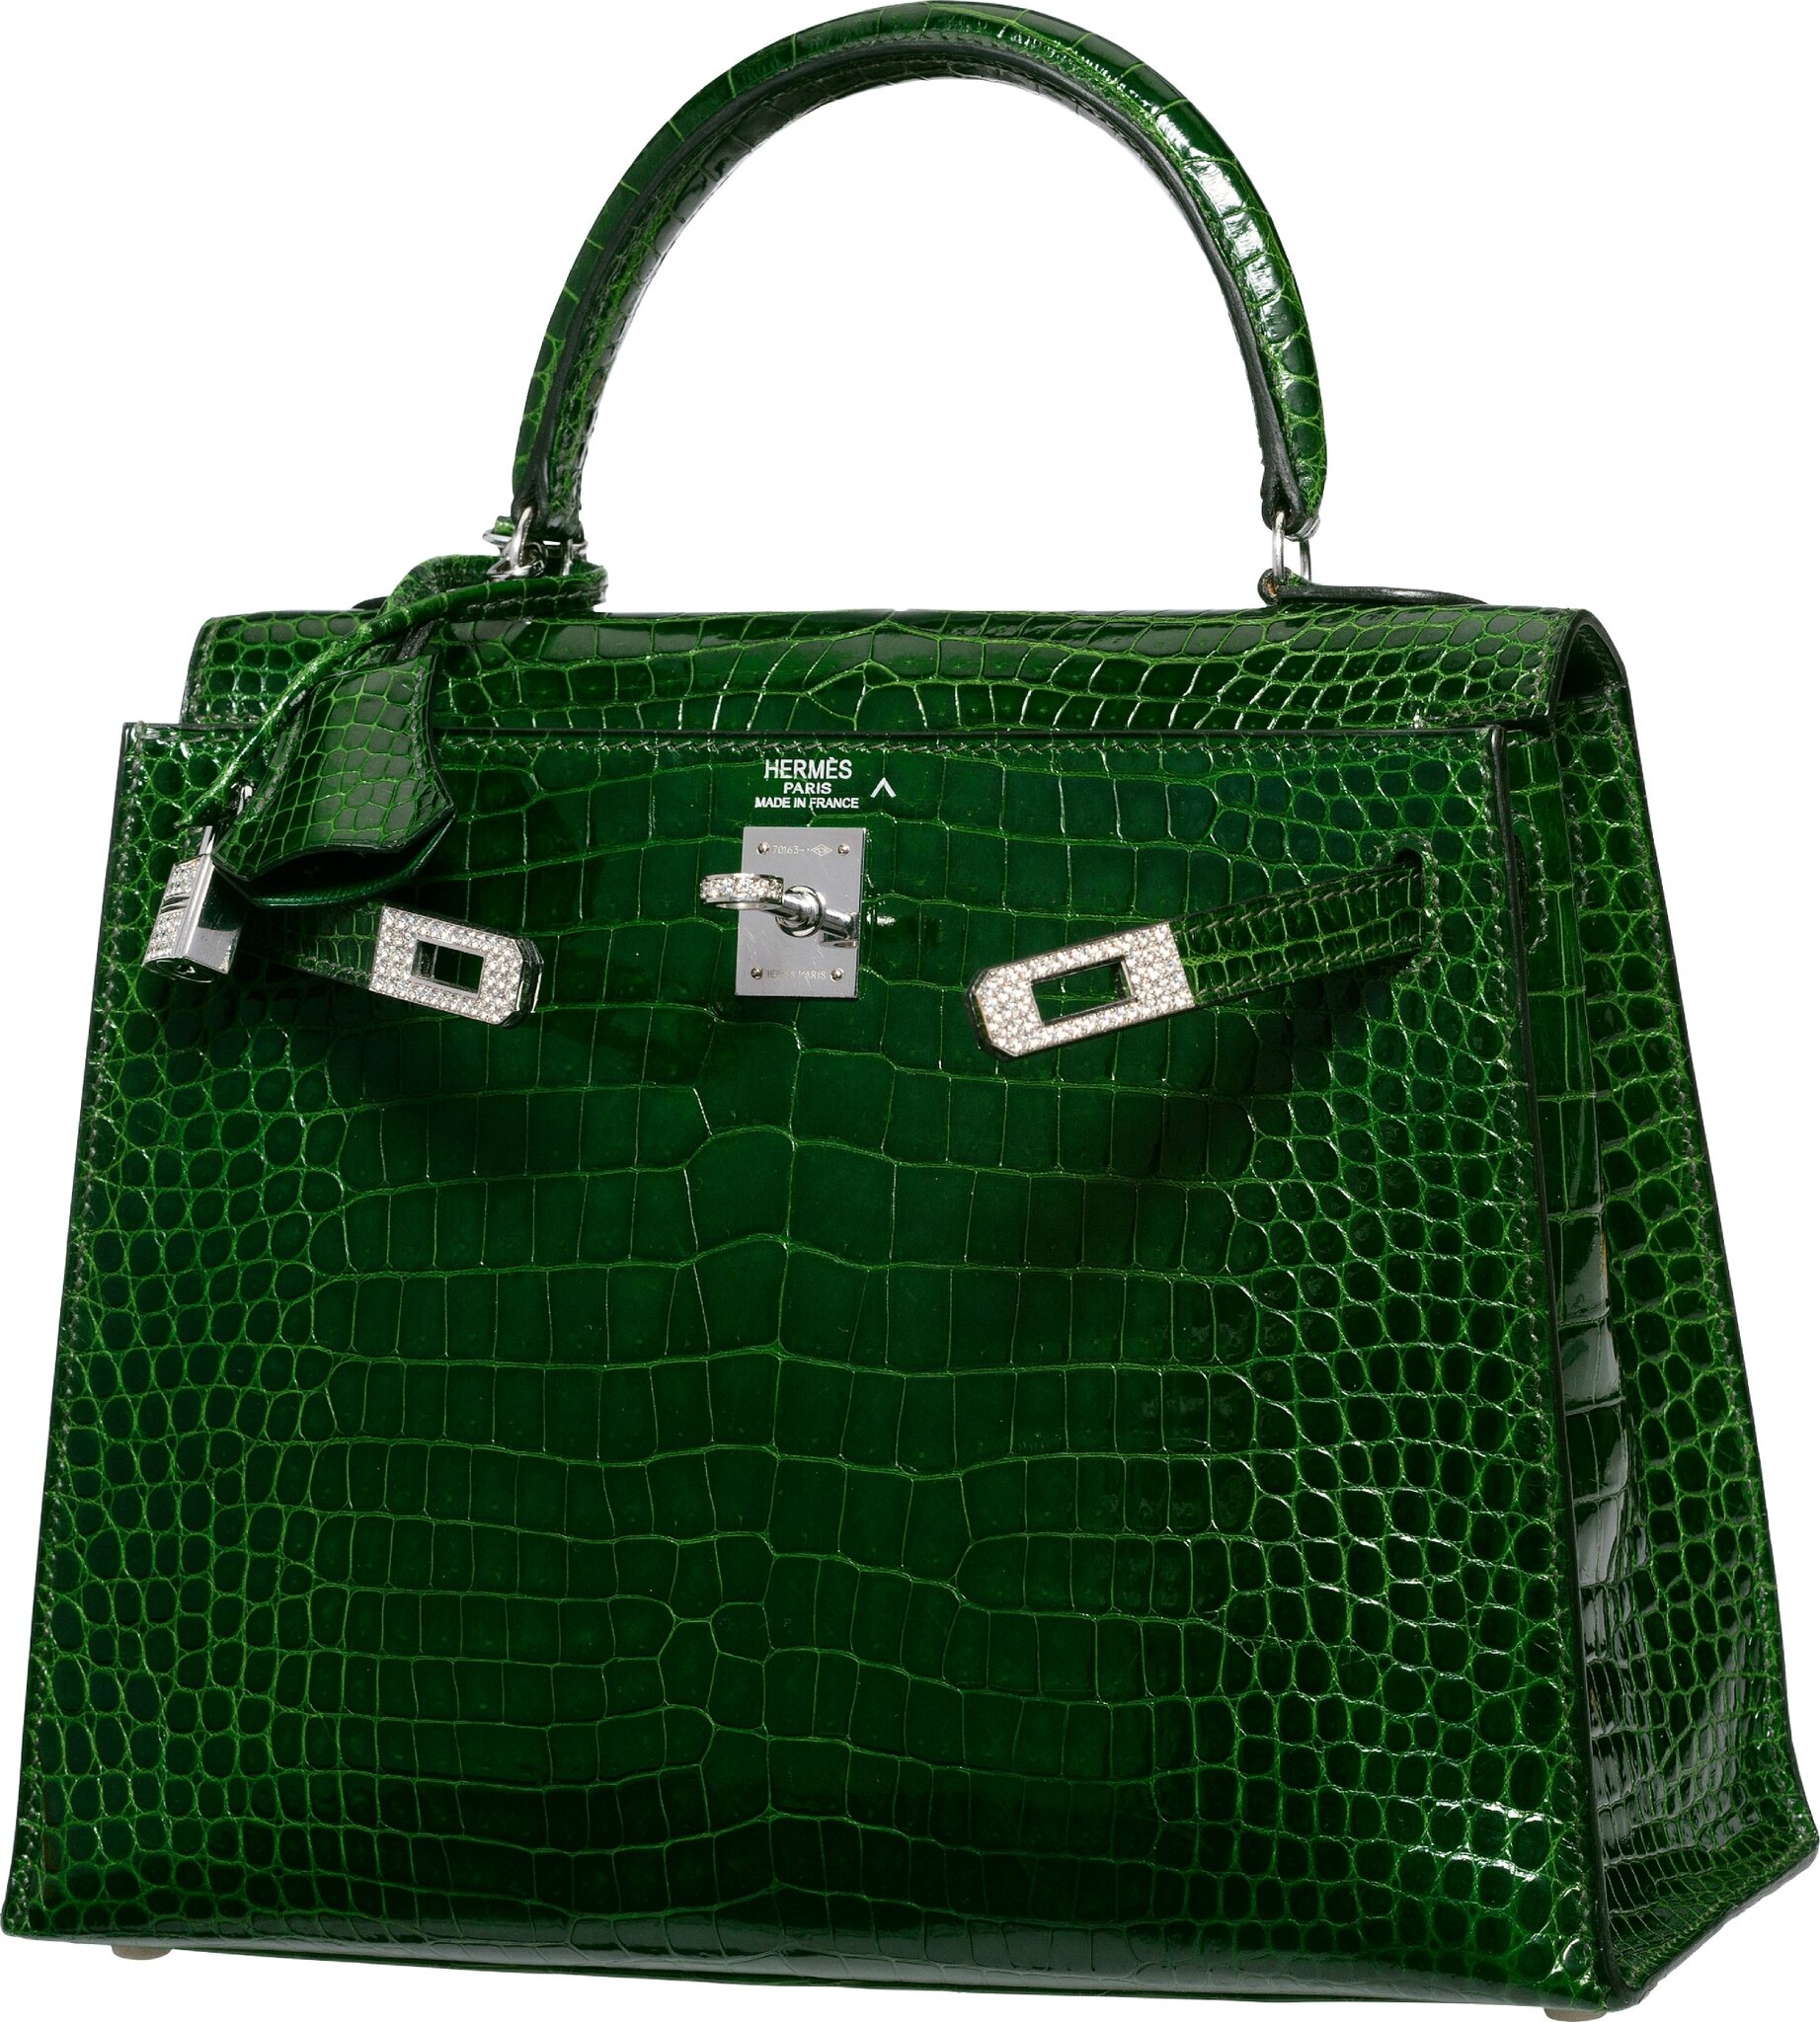 Chanel's diamond alligator bag